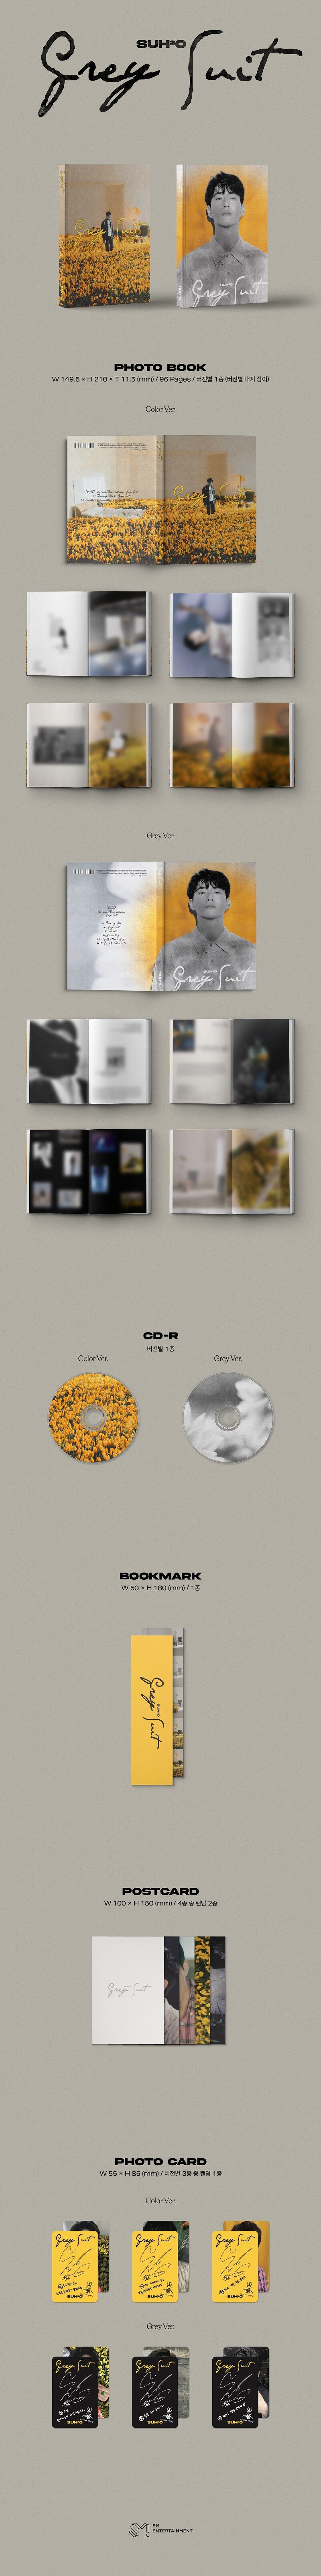 SUHO (EXO) 2ND MINI ALBUM 'GREY SUIT' (PHOTO BOOK) detail